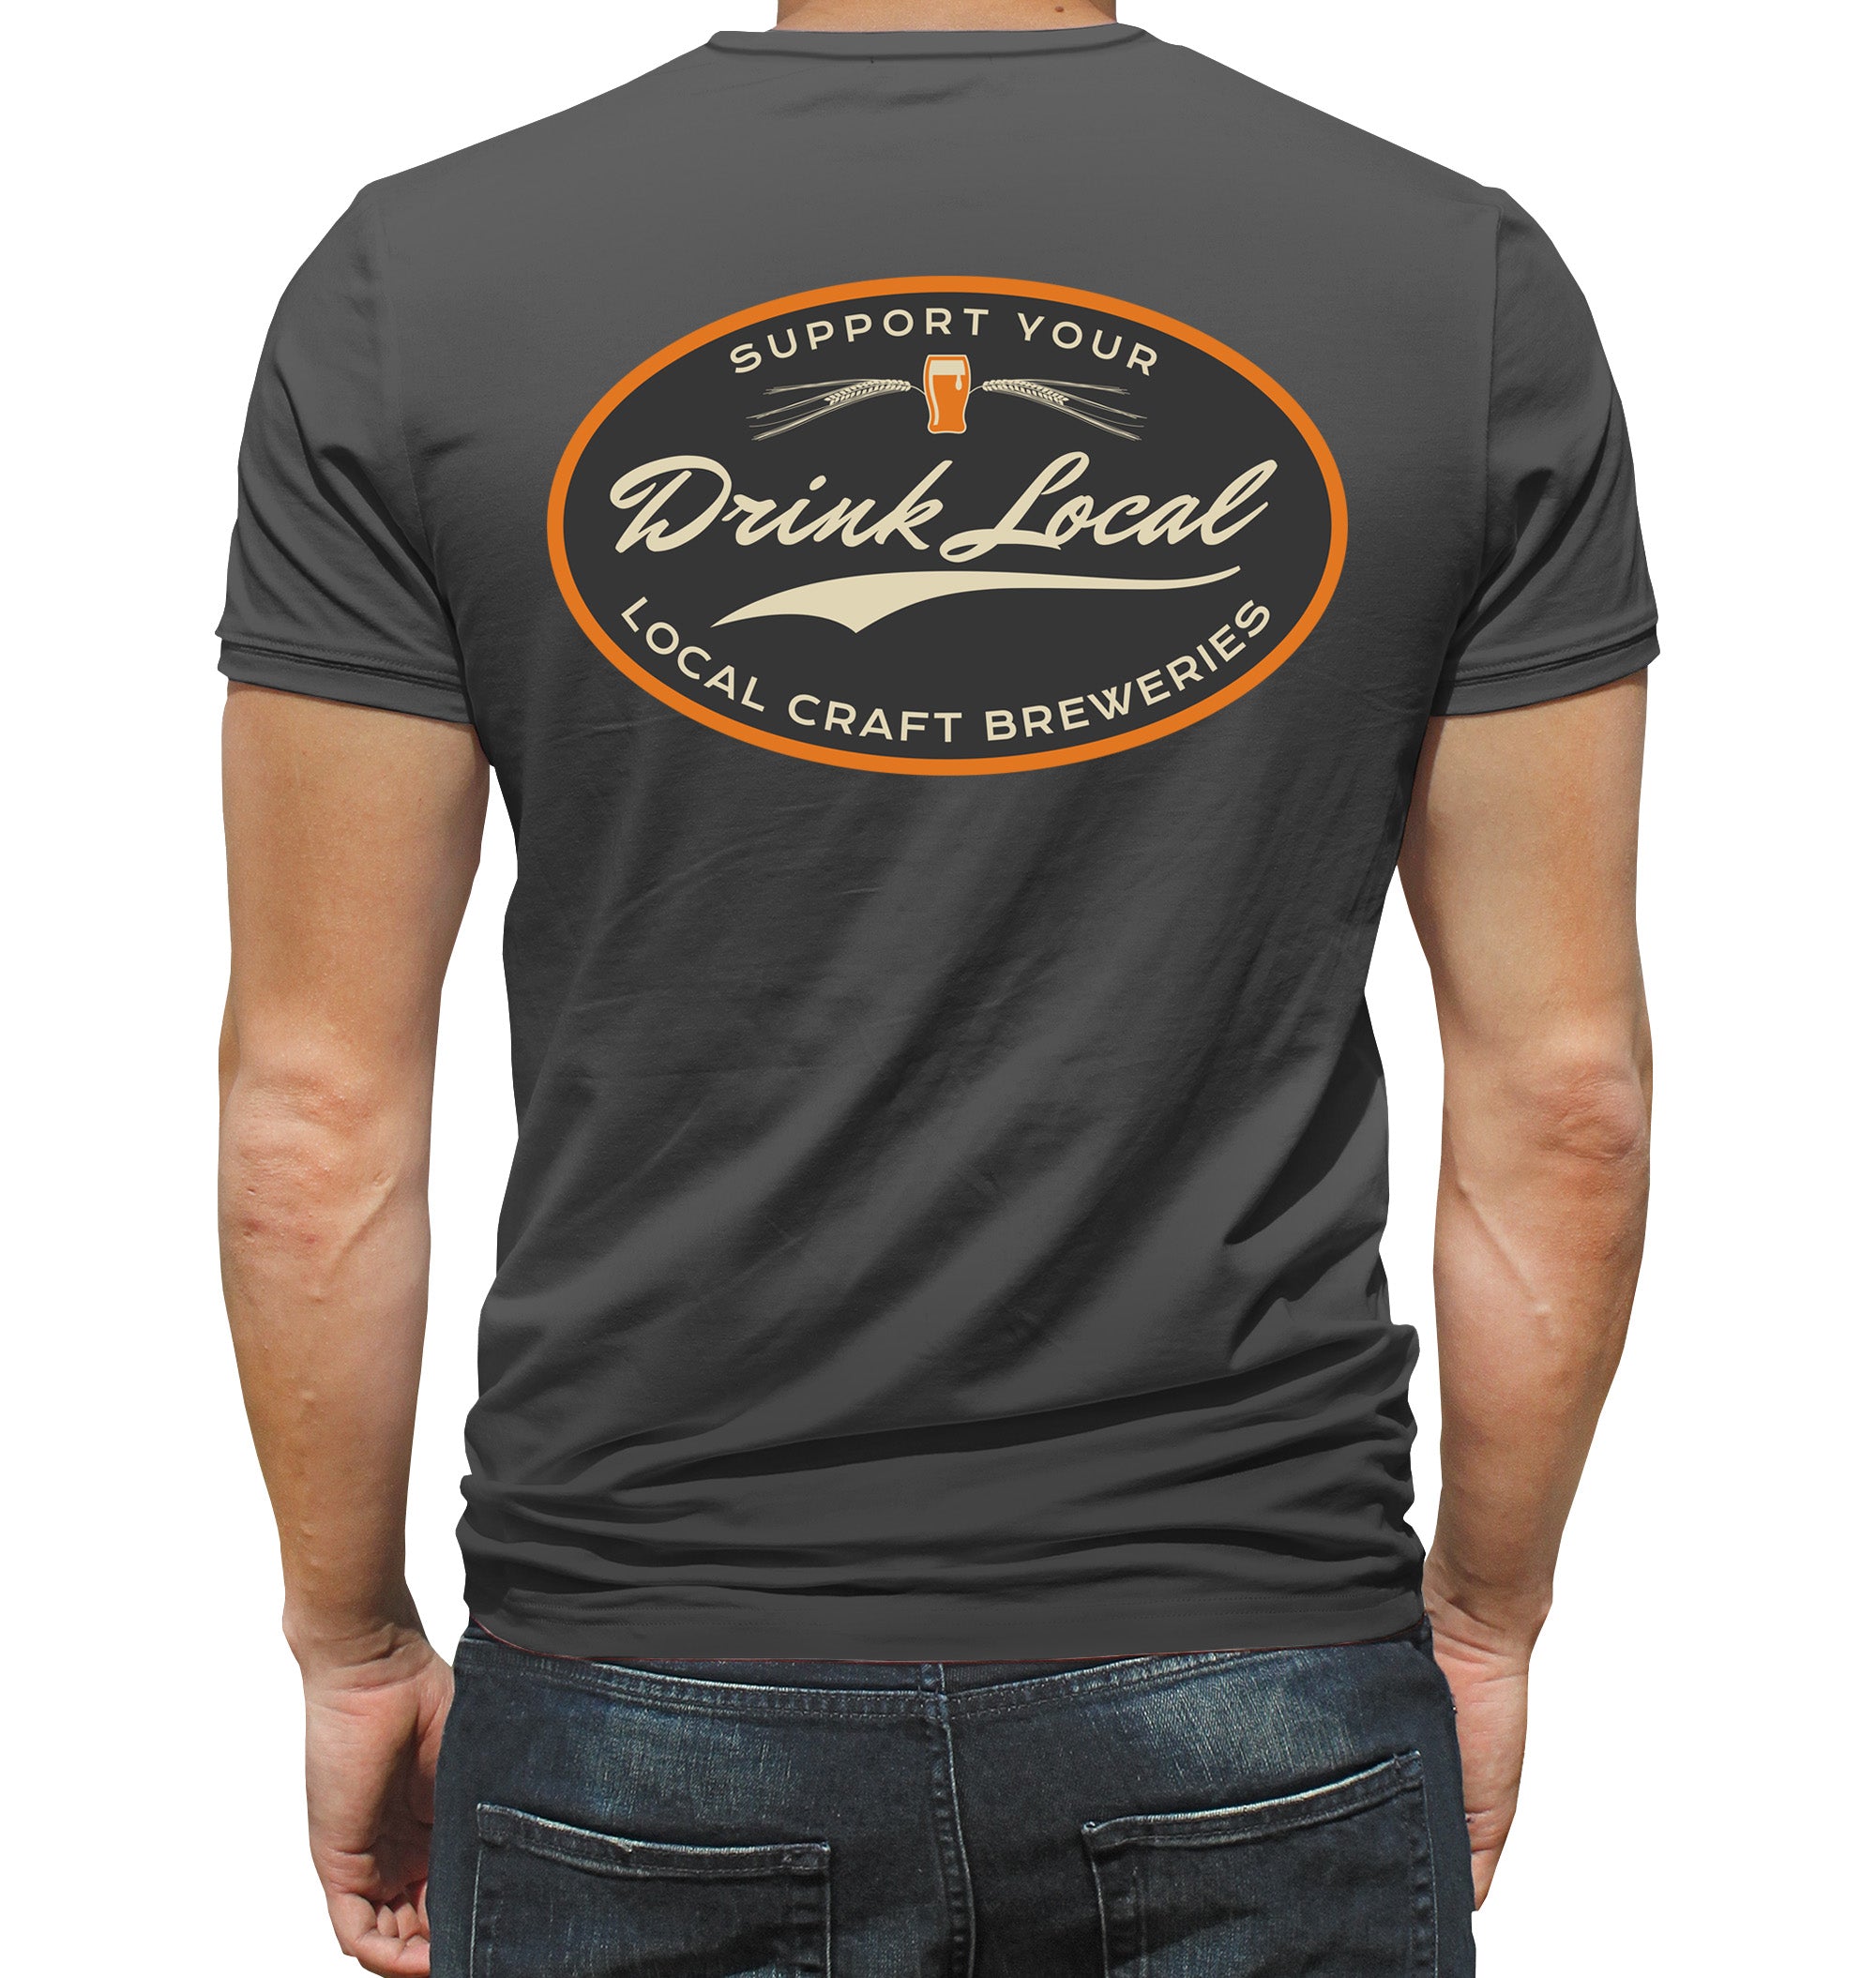 craft beer shirts